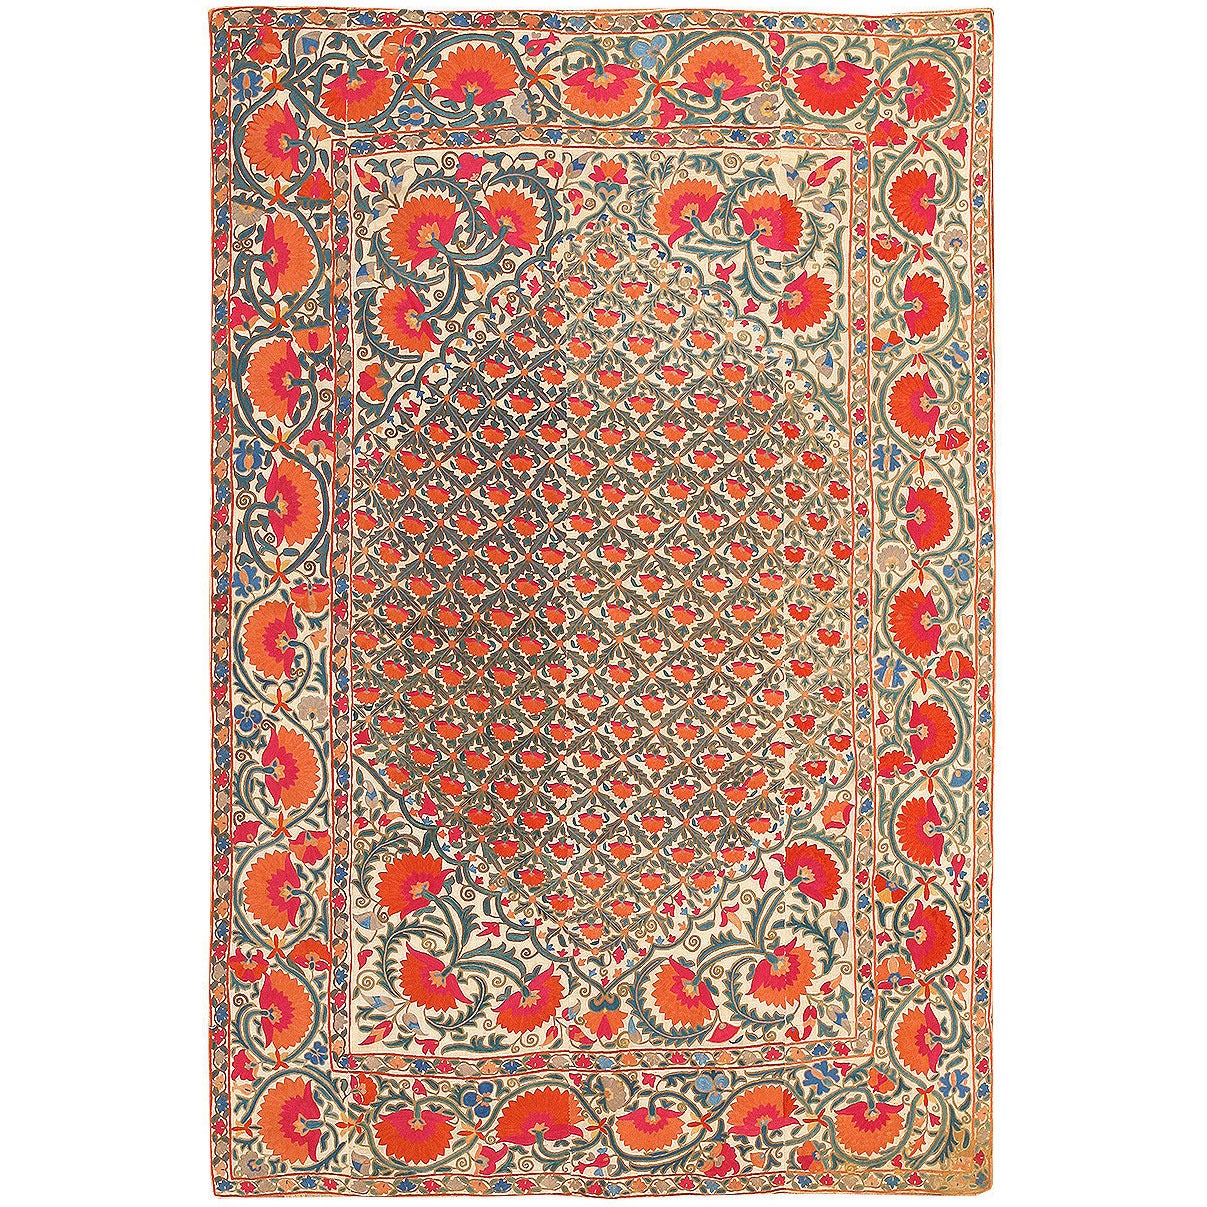 Antique Silk Uzbek Suzani Textile